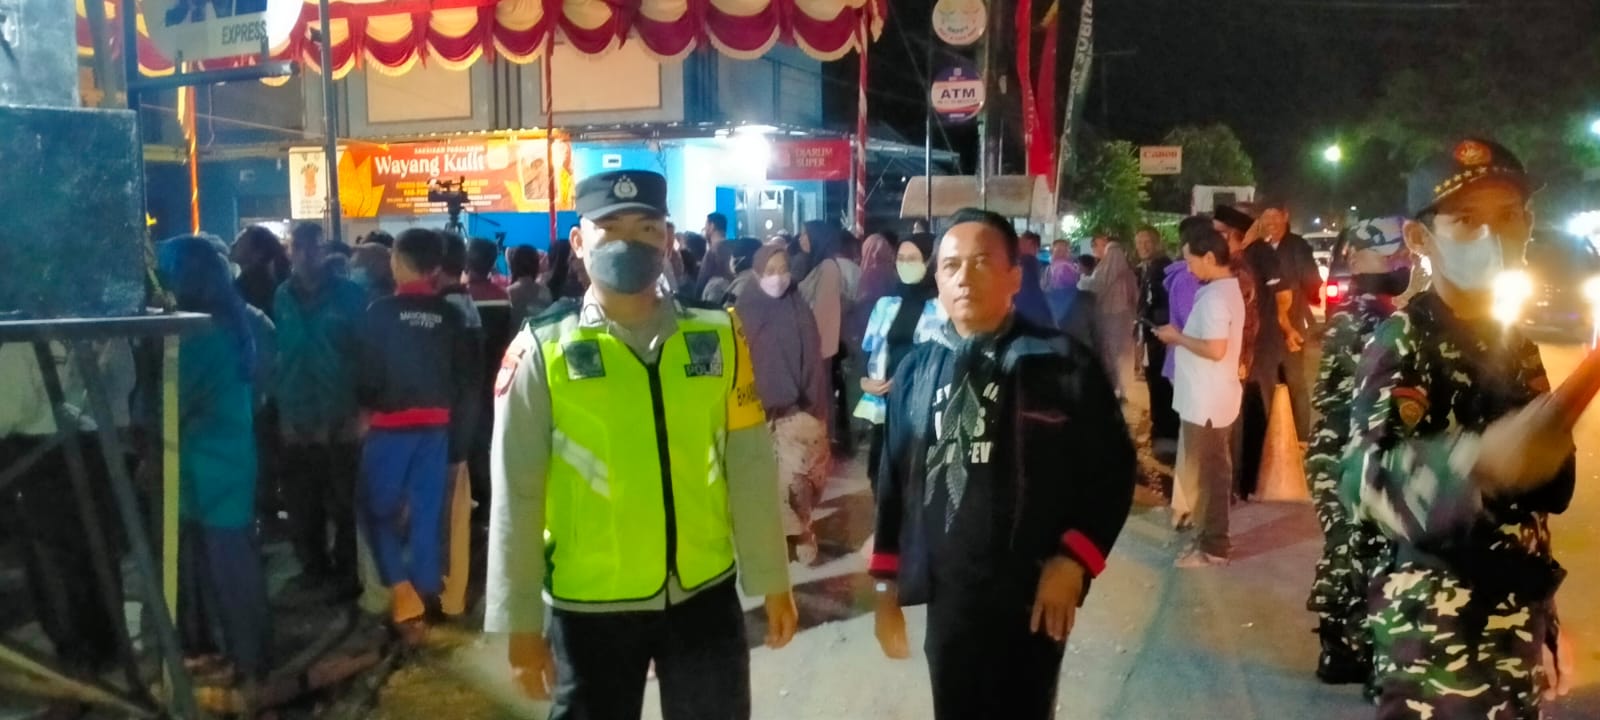 Polsek Babadan PAM kegiatan Wayang Kulit Semalam Suntuk Di Bumdes Desa Ngunut,Babadan